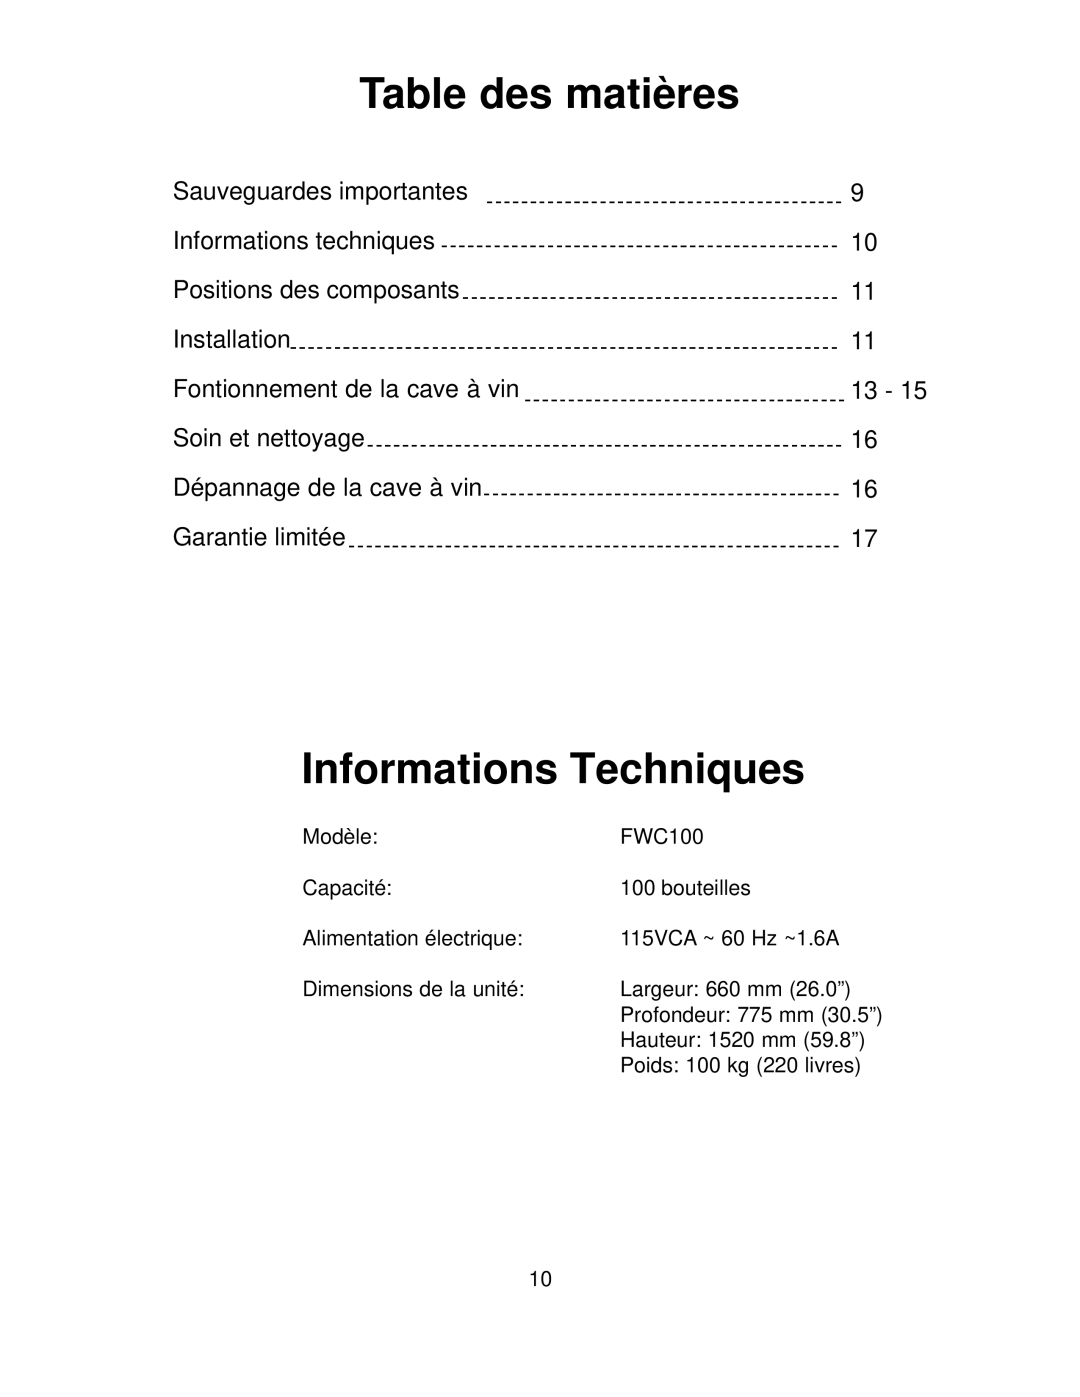 Franklin Industries, L.L.C FCW100 manual Table des matières, Informations Techniques 